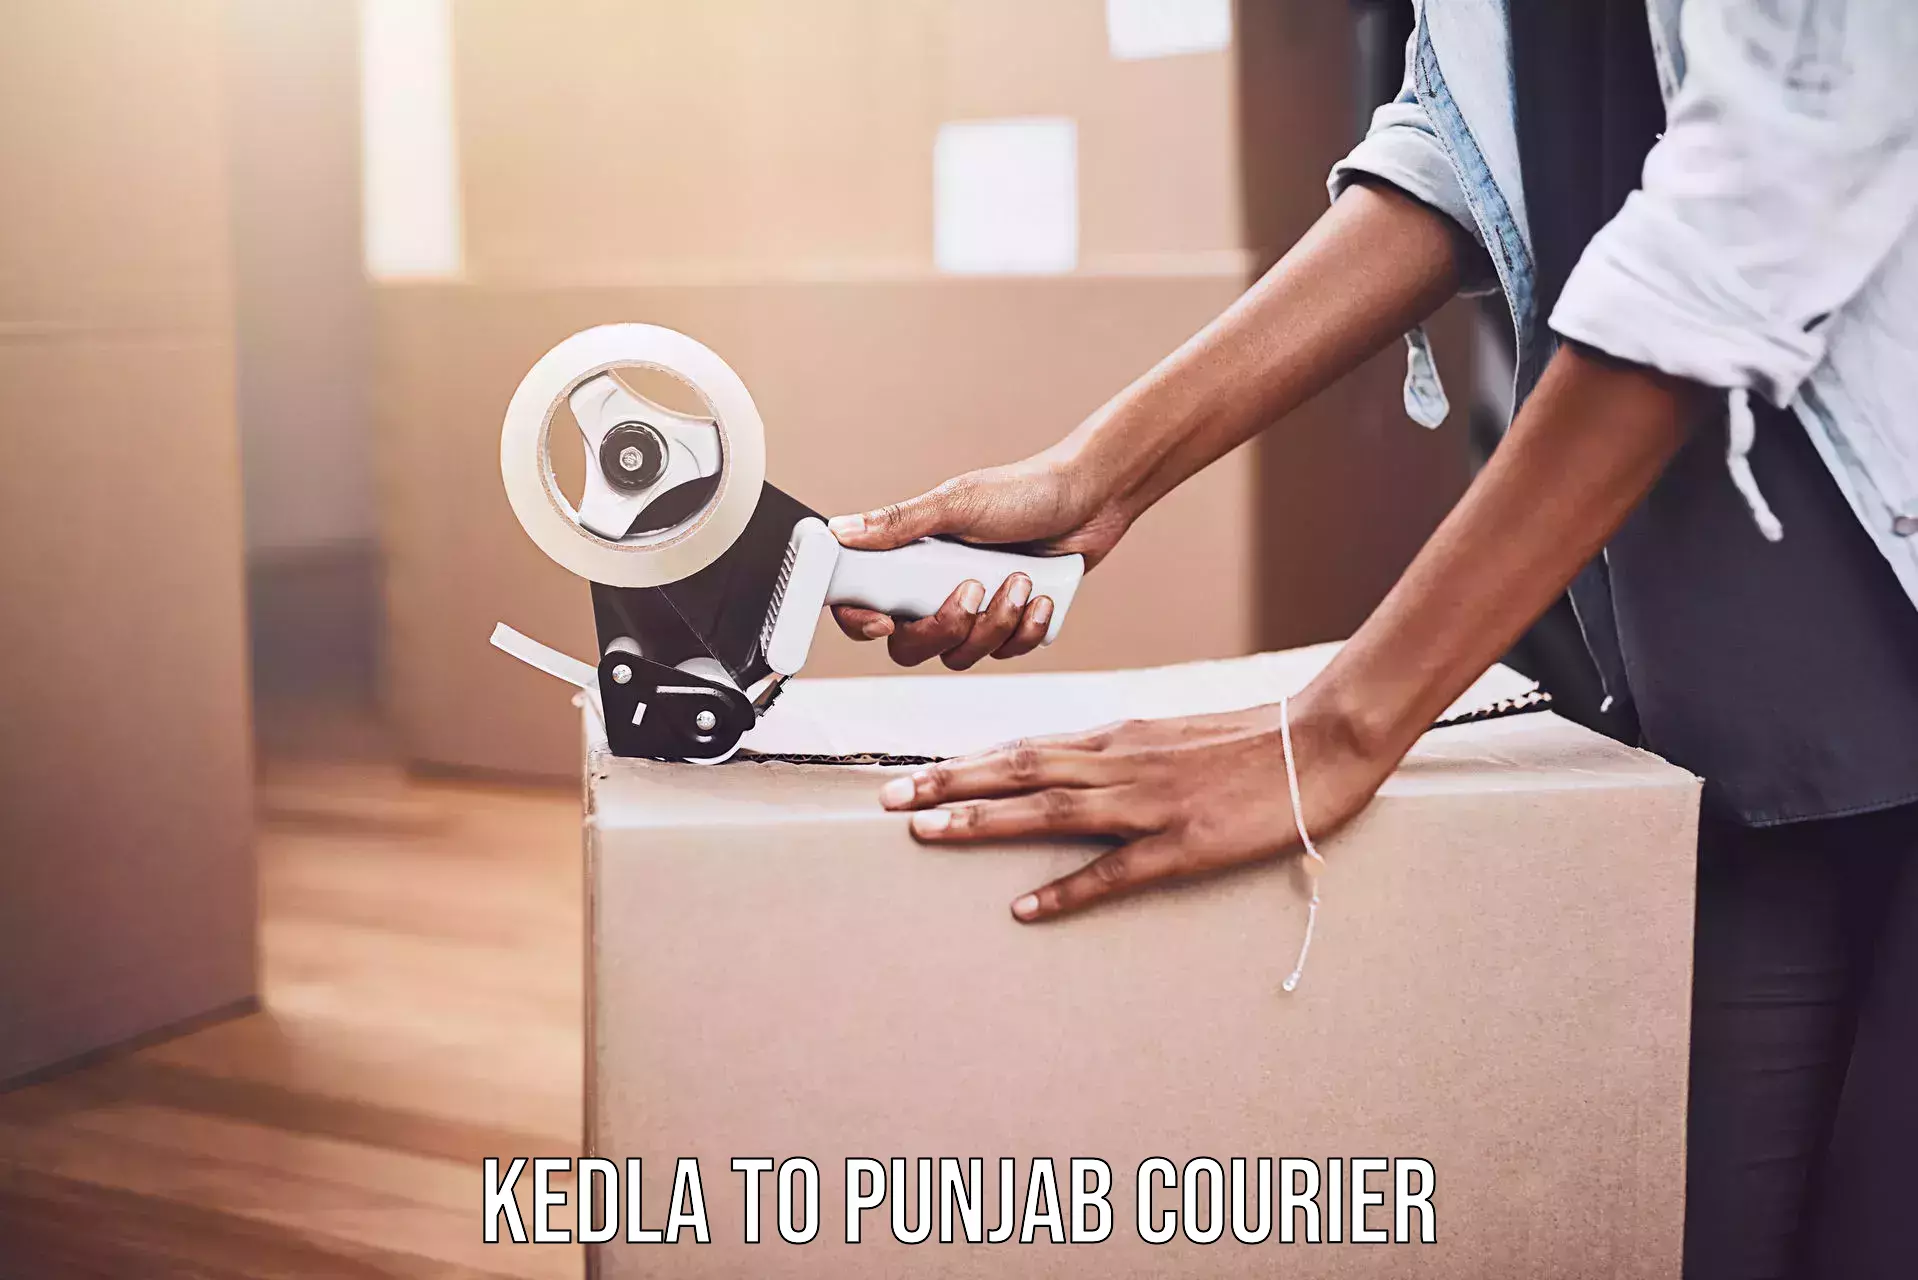 Global logistics network Kedla to Punjab